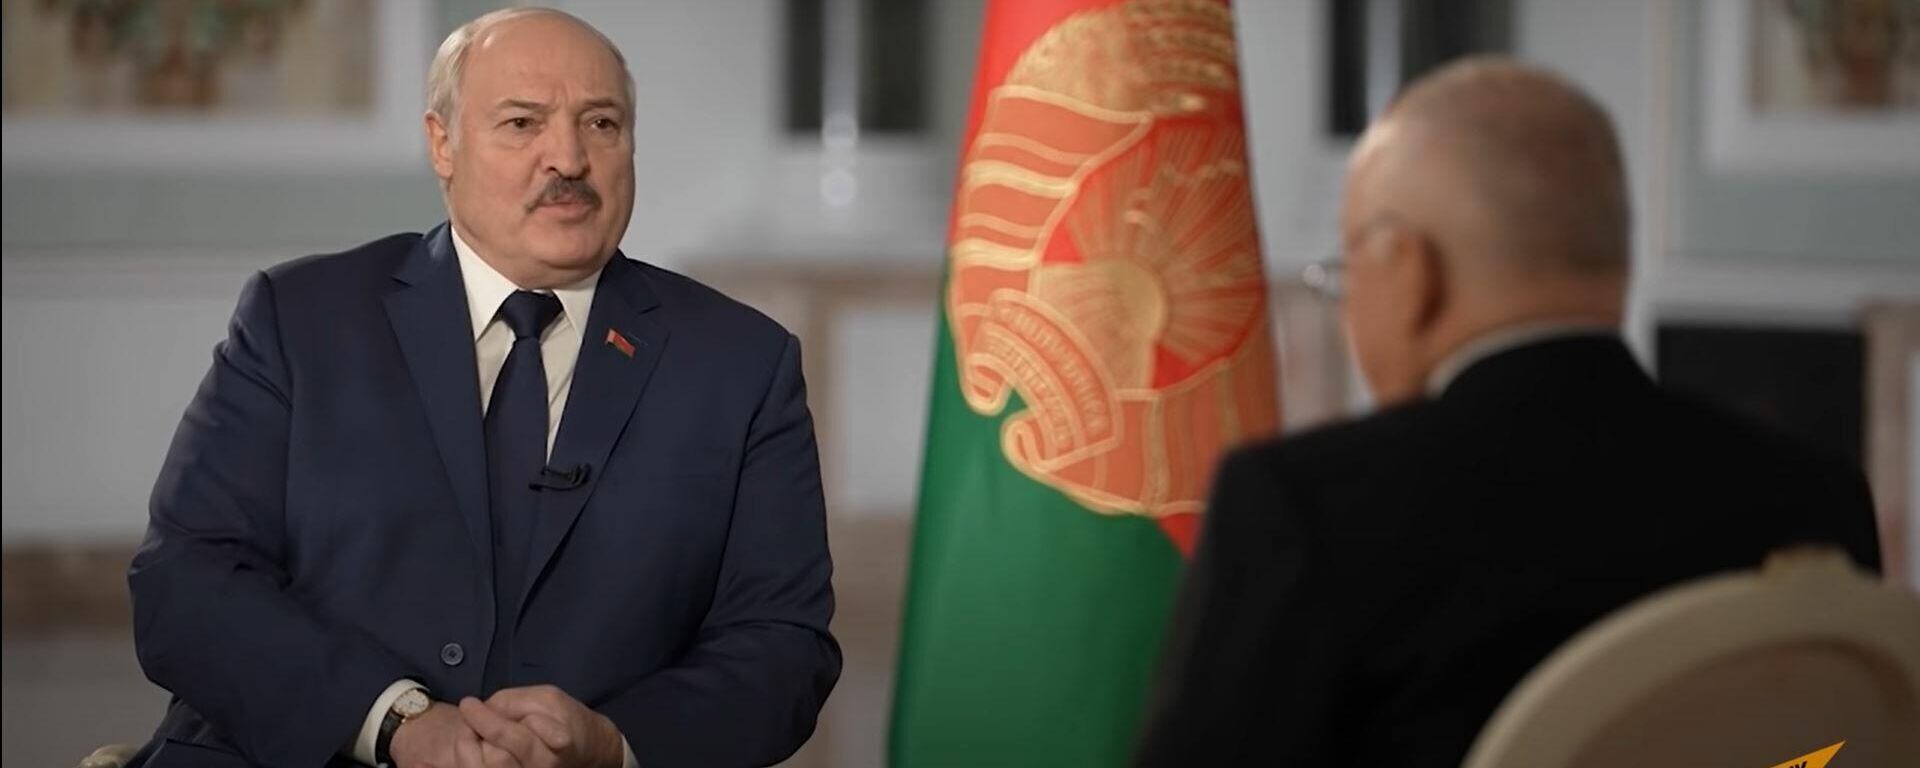 Aleksandra Lukašenko lielā intervija Dmitrijam Kiseļovam - Sputnik Latvija, 1920, 07.12.2021